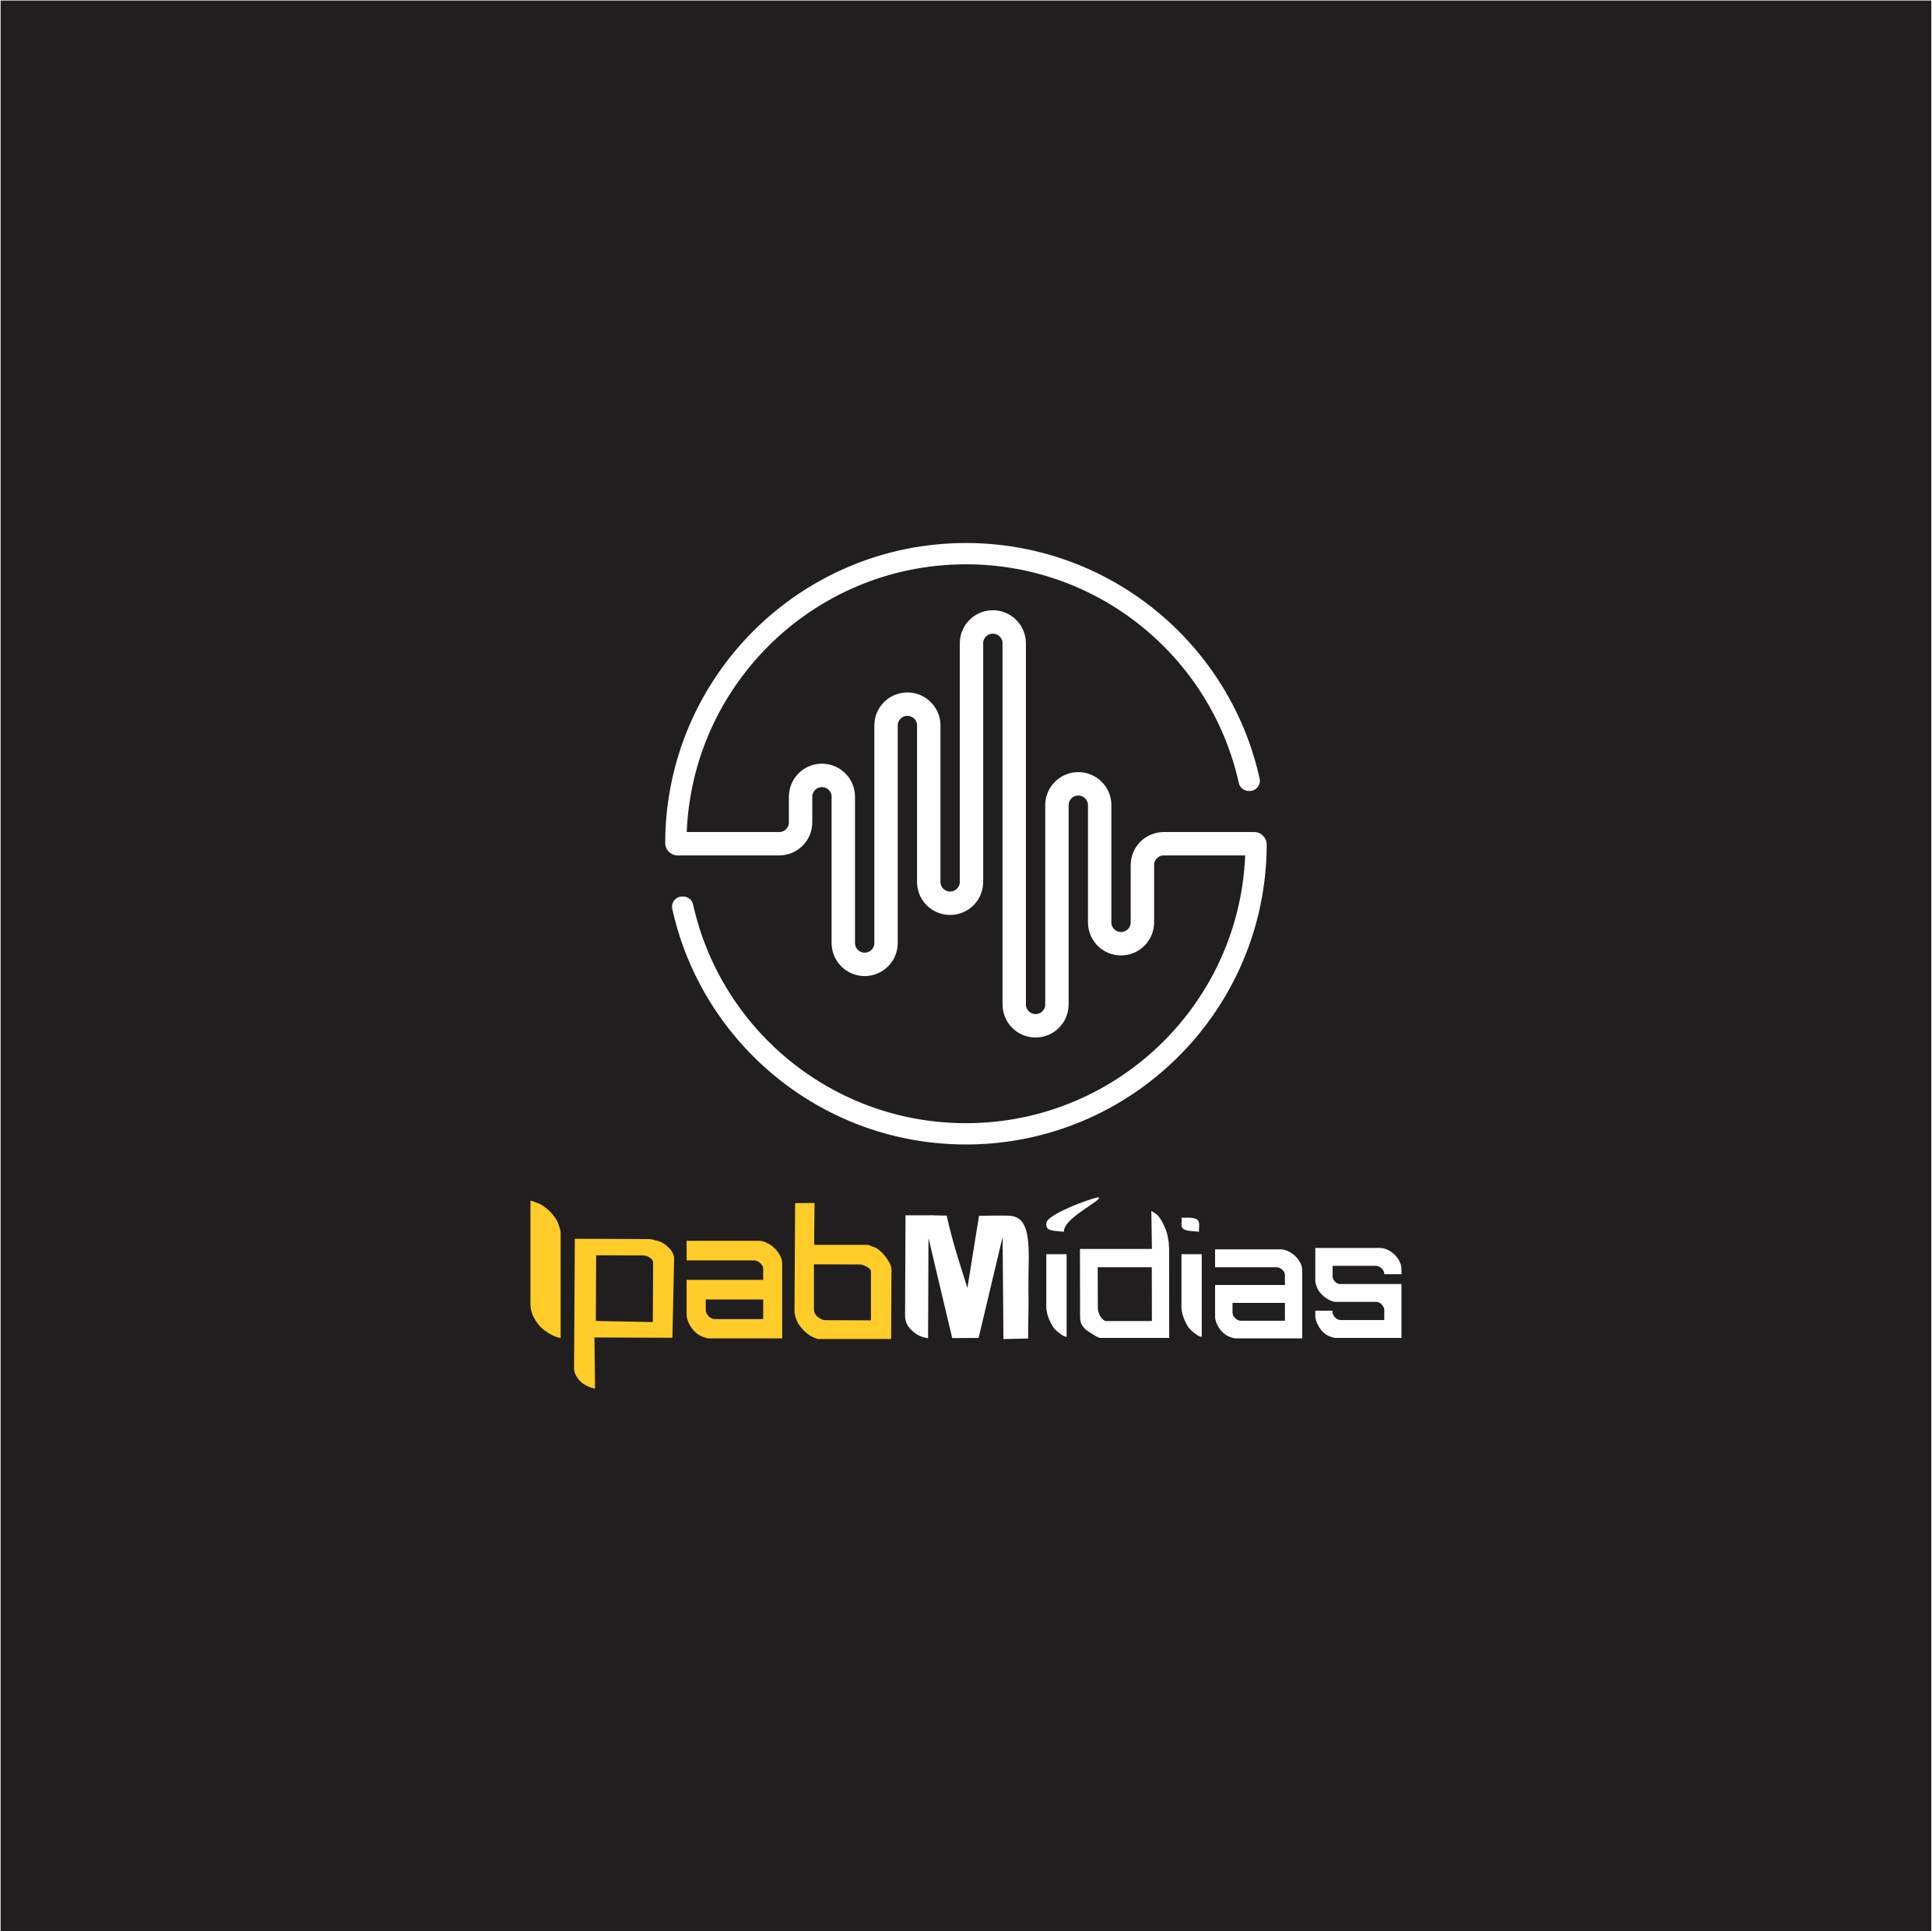 ipab midias logo_2